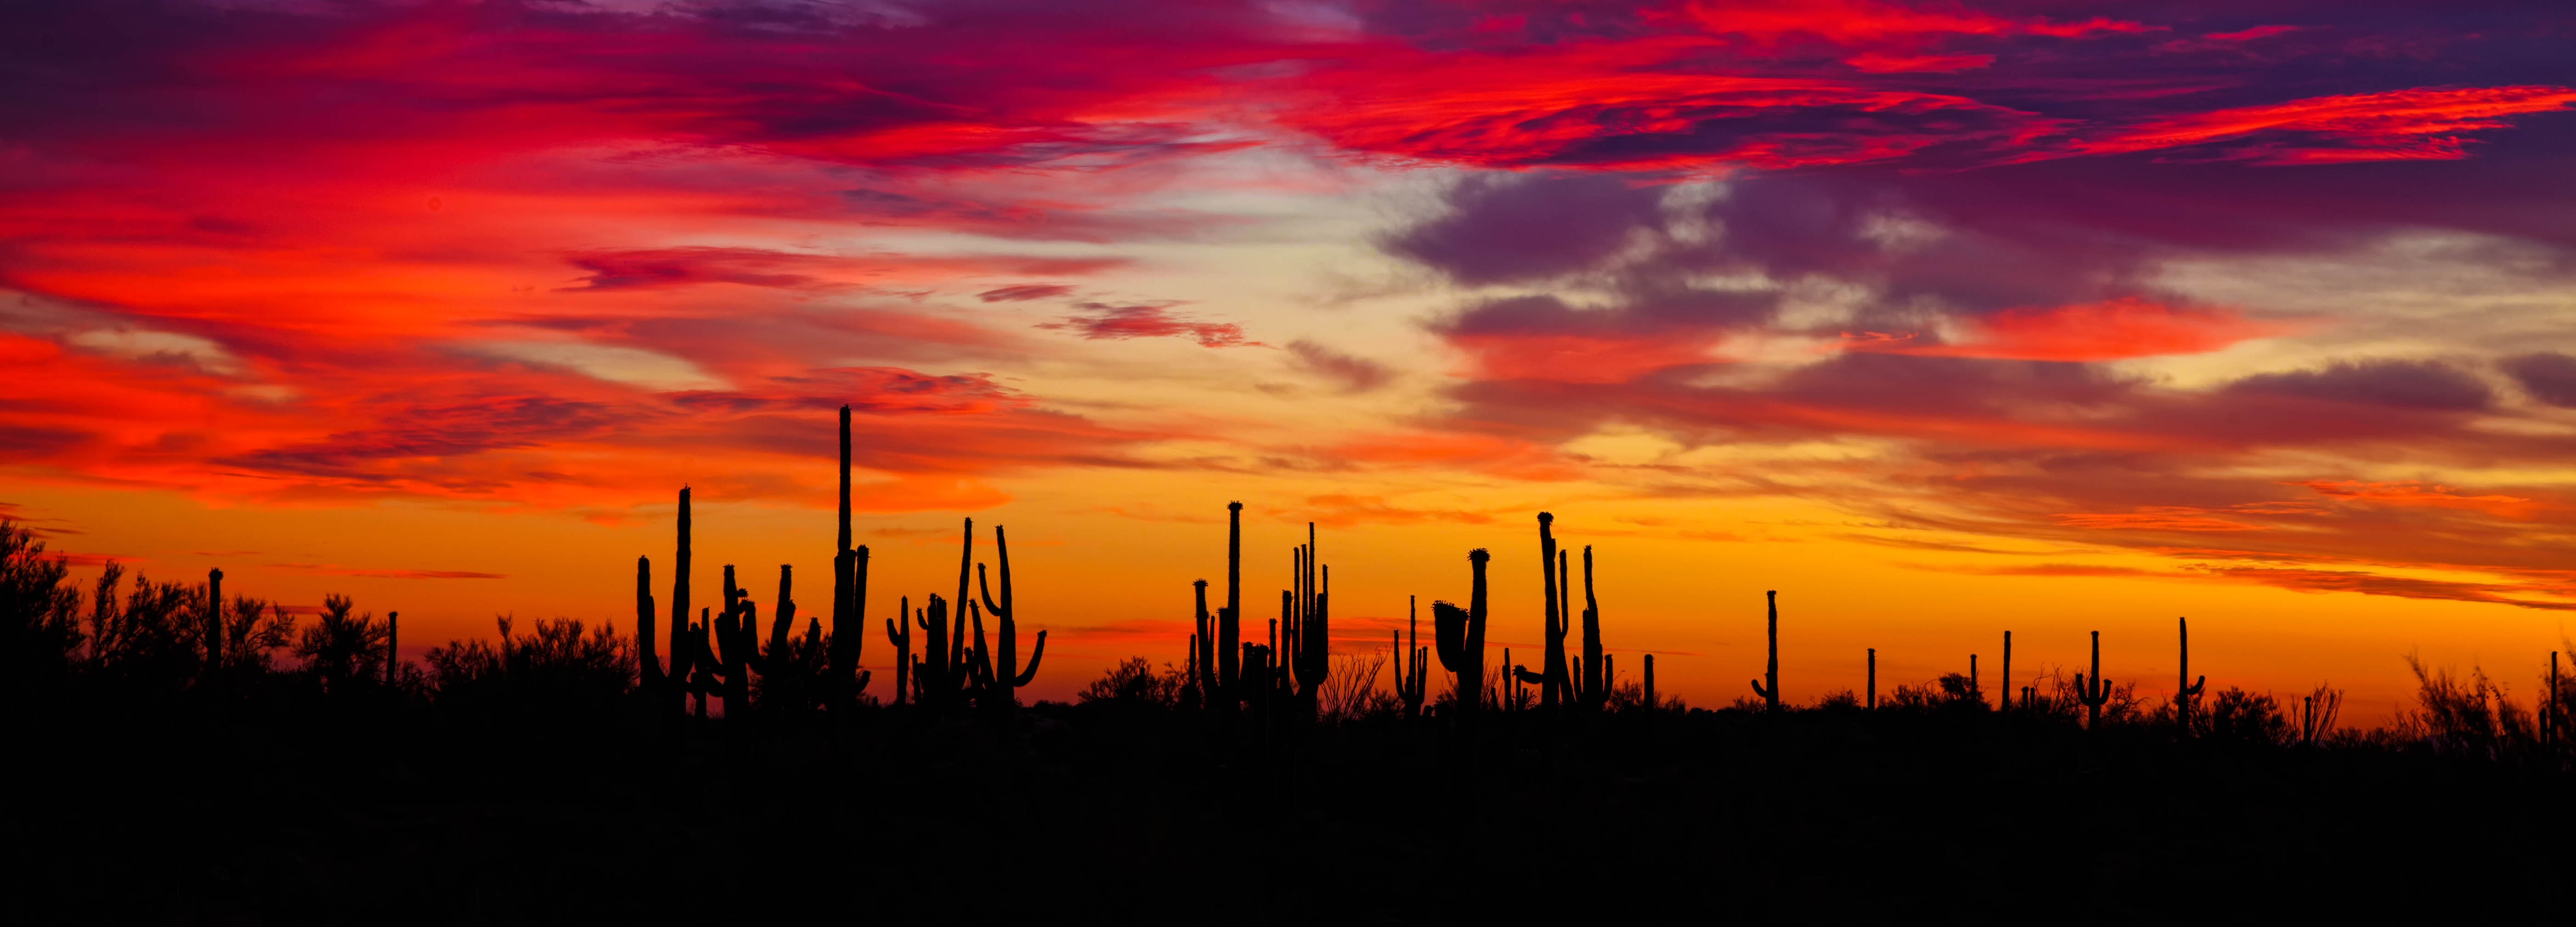 arizona, cactuses, nature, sunset, silhouettes